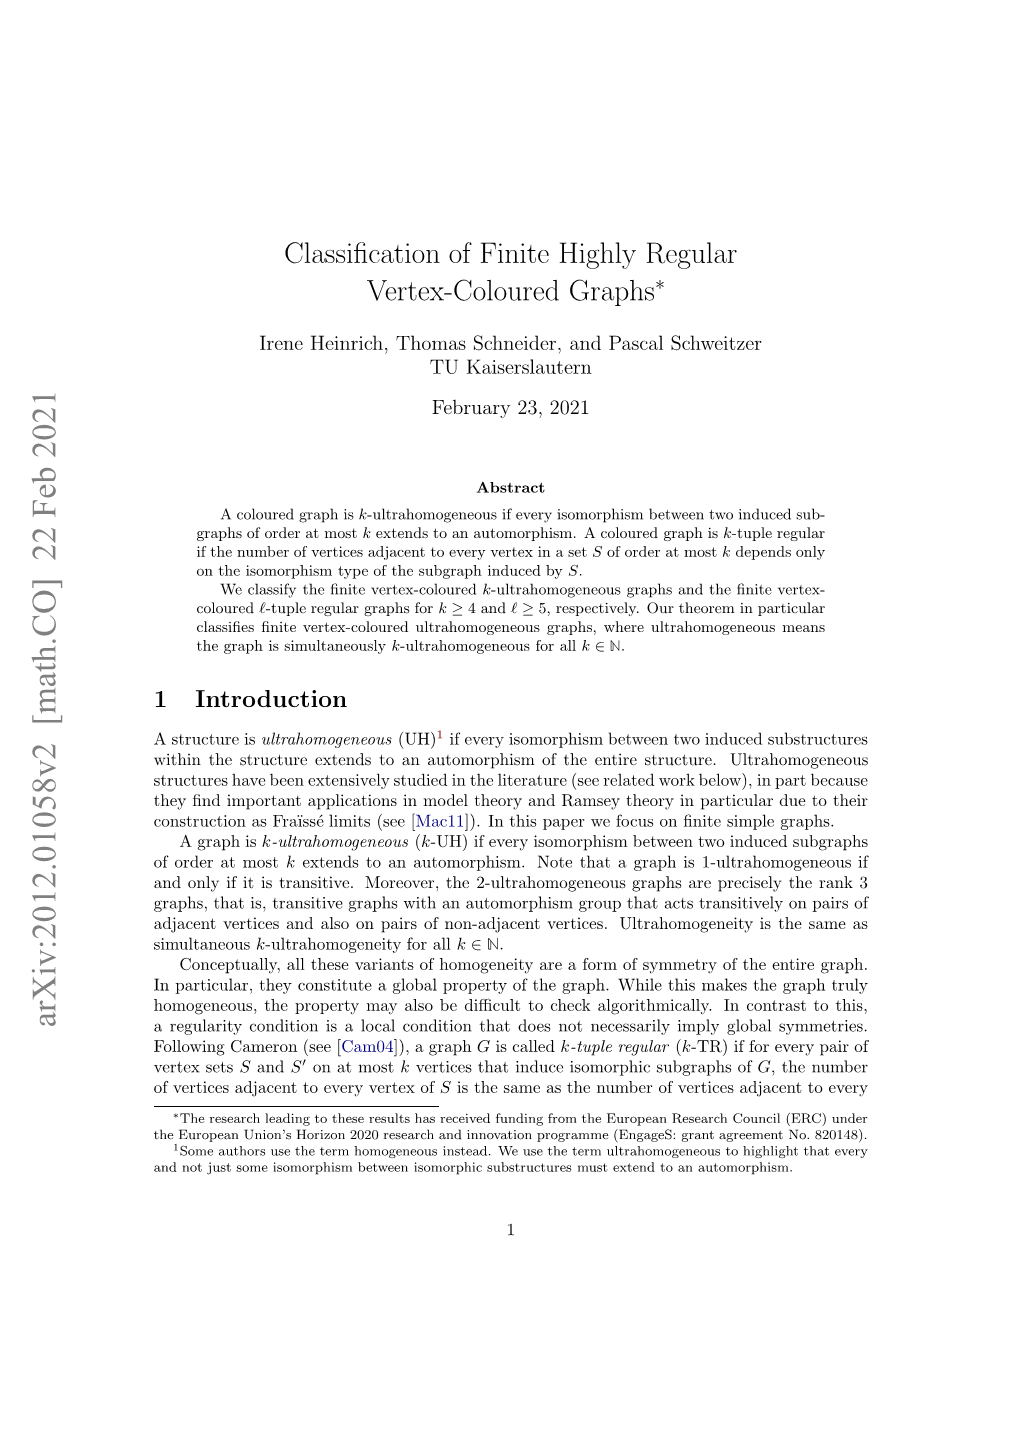 Classification of Finite Highly Regular Vertex-Coloured Graphs